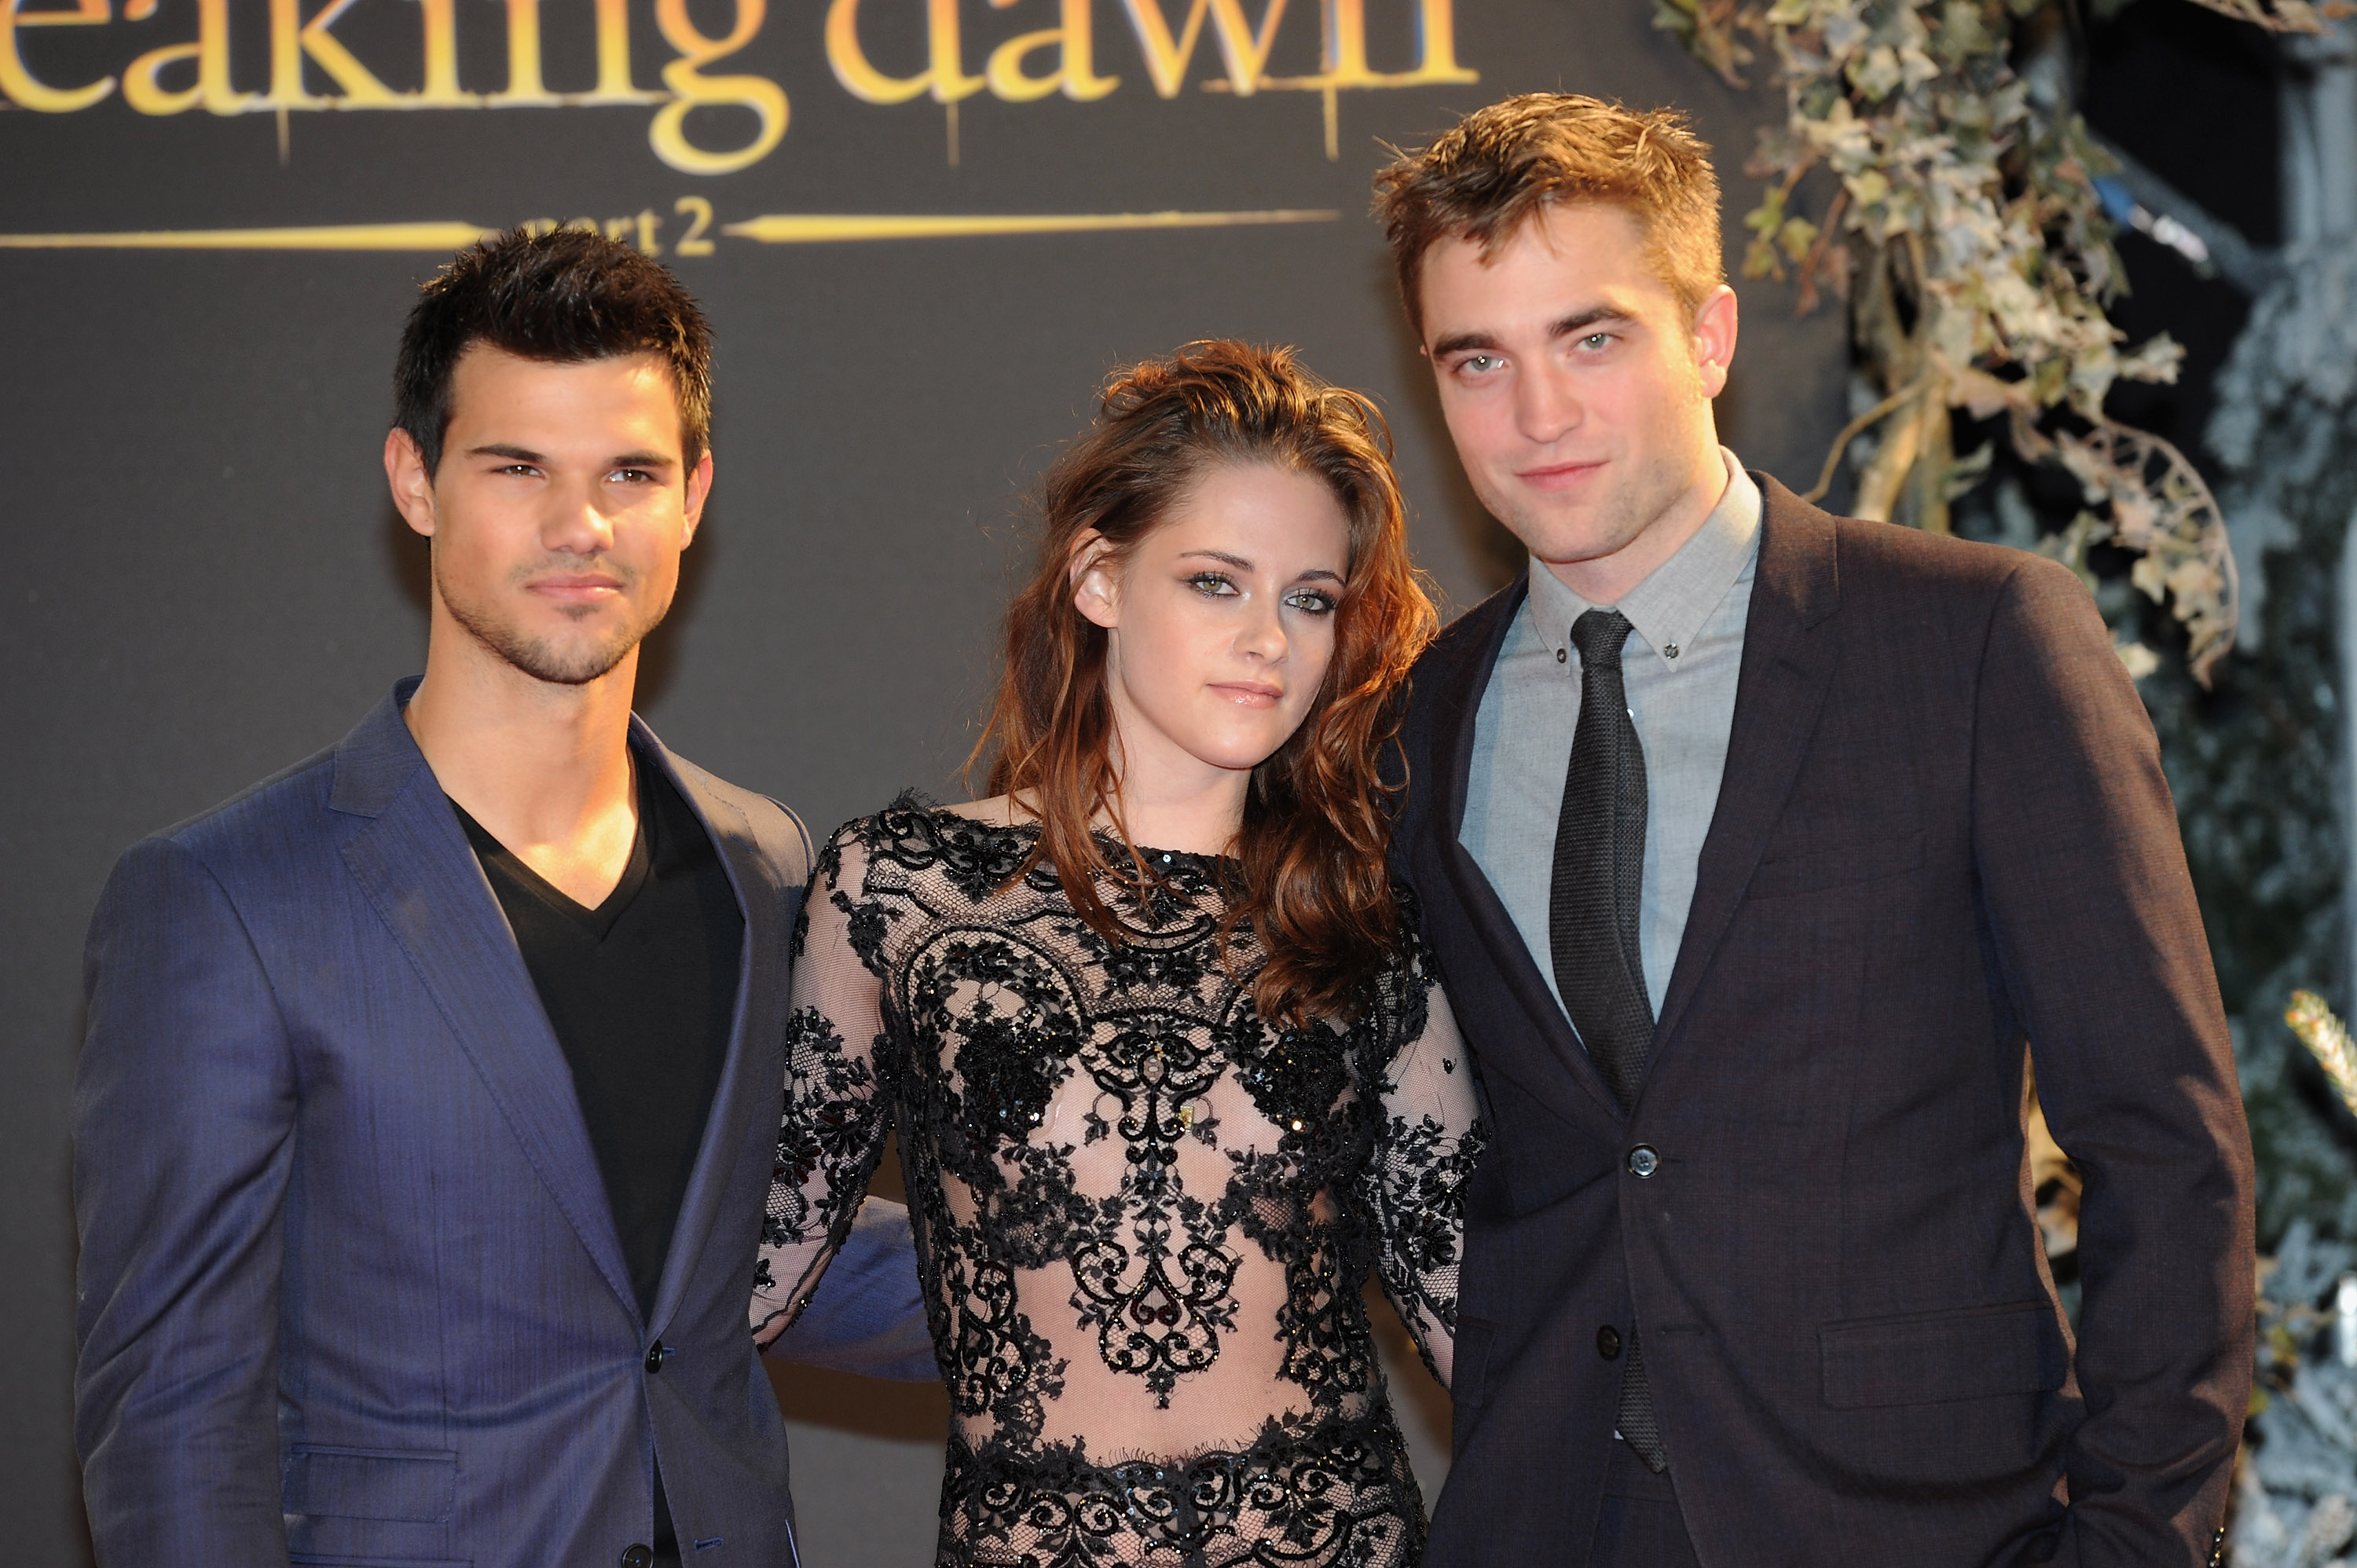 Taylor Lautner, Kristen Stewart, and Robert Pattinson in London, England on November 14, 2012 | Source: Getty Images